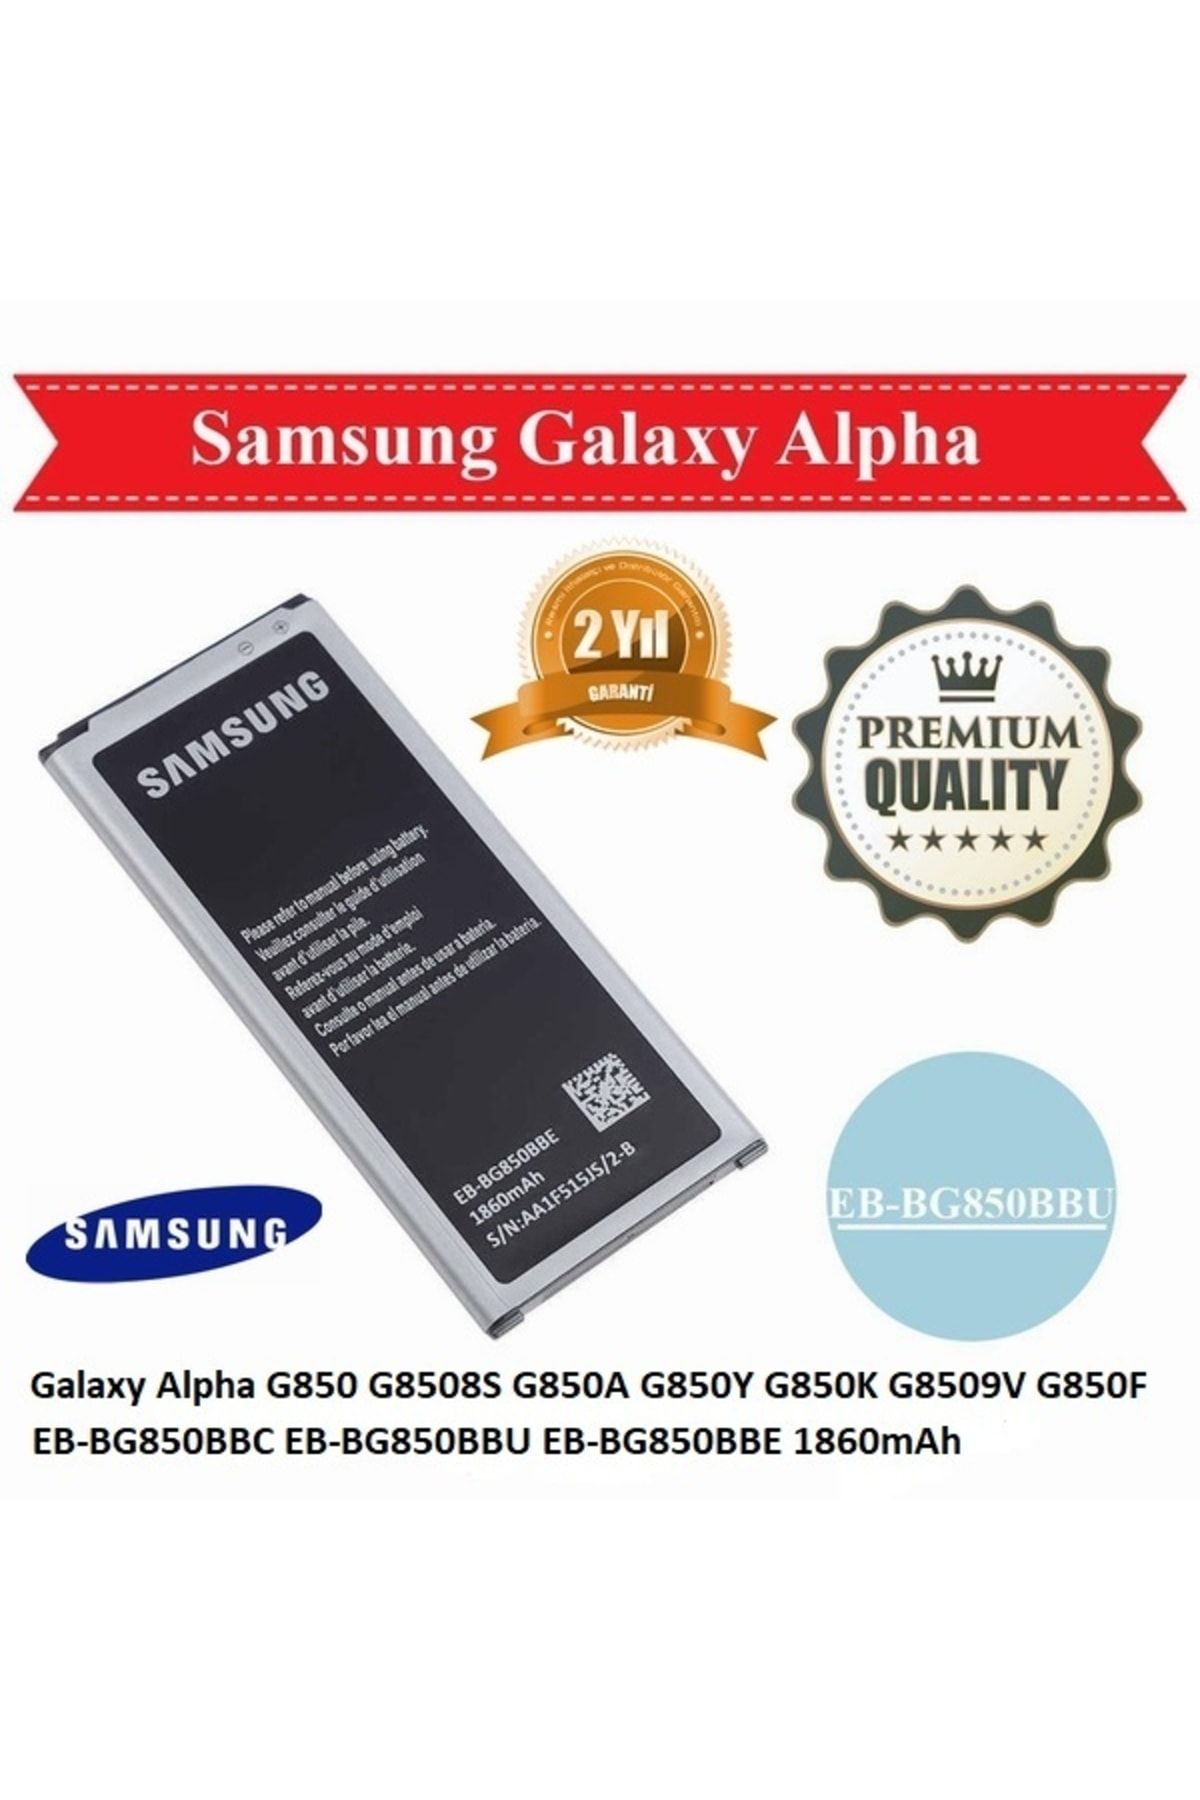 Genel Markalar Day Samsung Galaxy Alpha G8508s Eb-bg850bbc Eb-bg850bbu 1860mah Yüksek Kapasiteli 2 Yıl Garanti